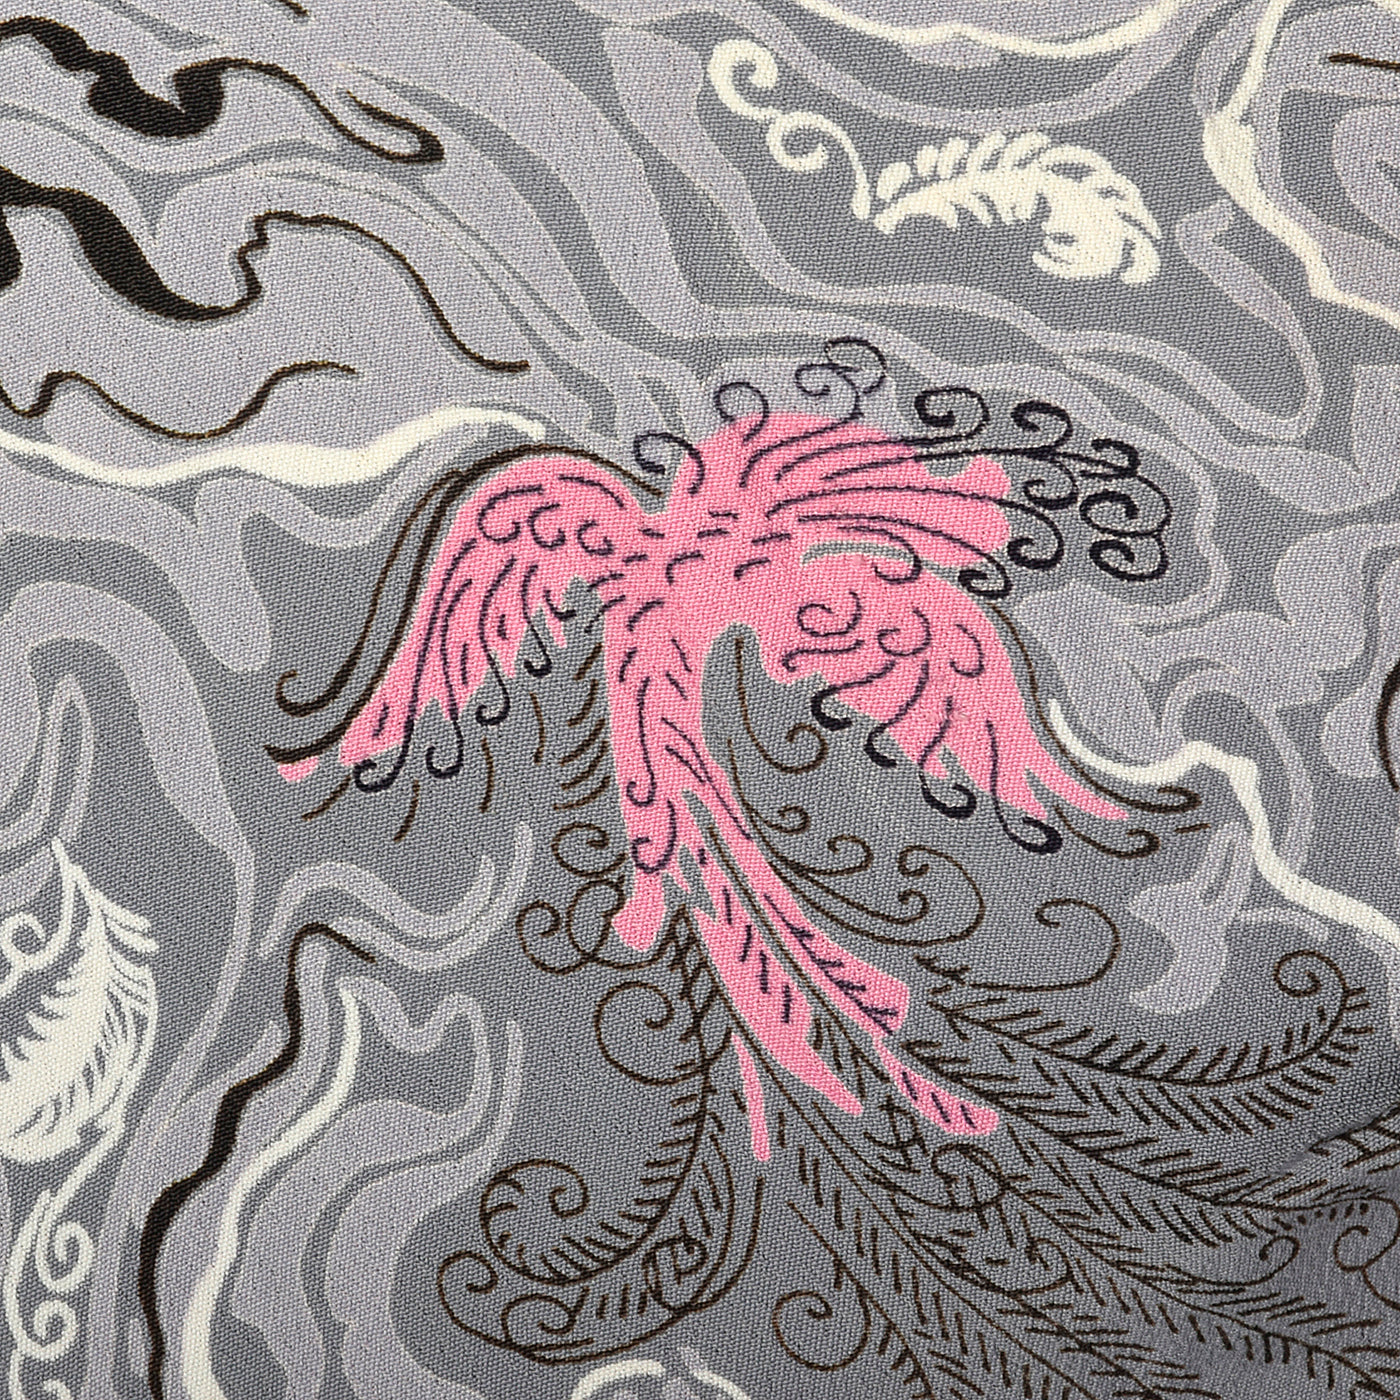 1940s Novelty Print Rayon Dress Gray Swirl with Birds